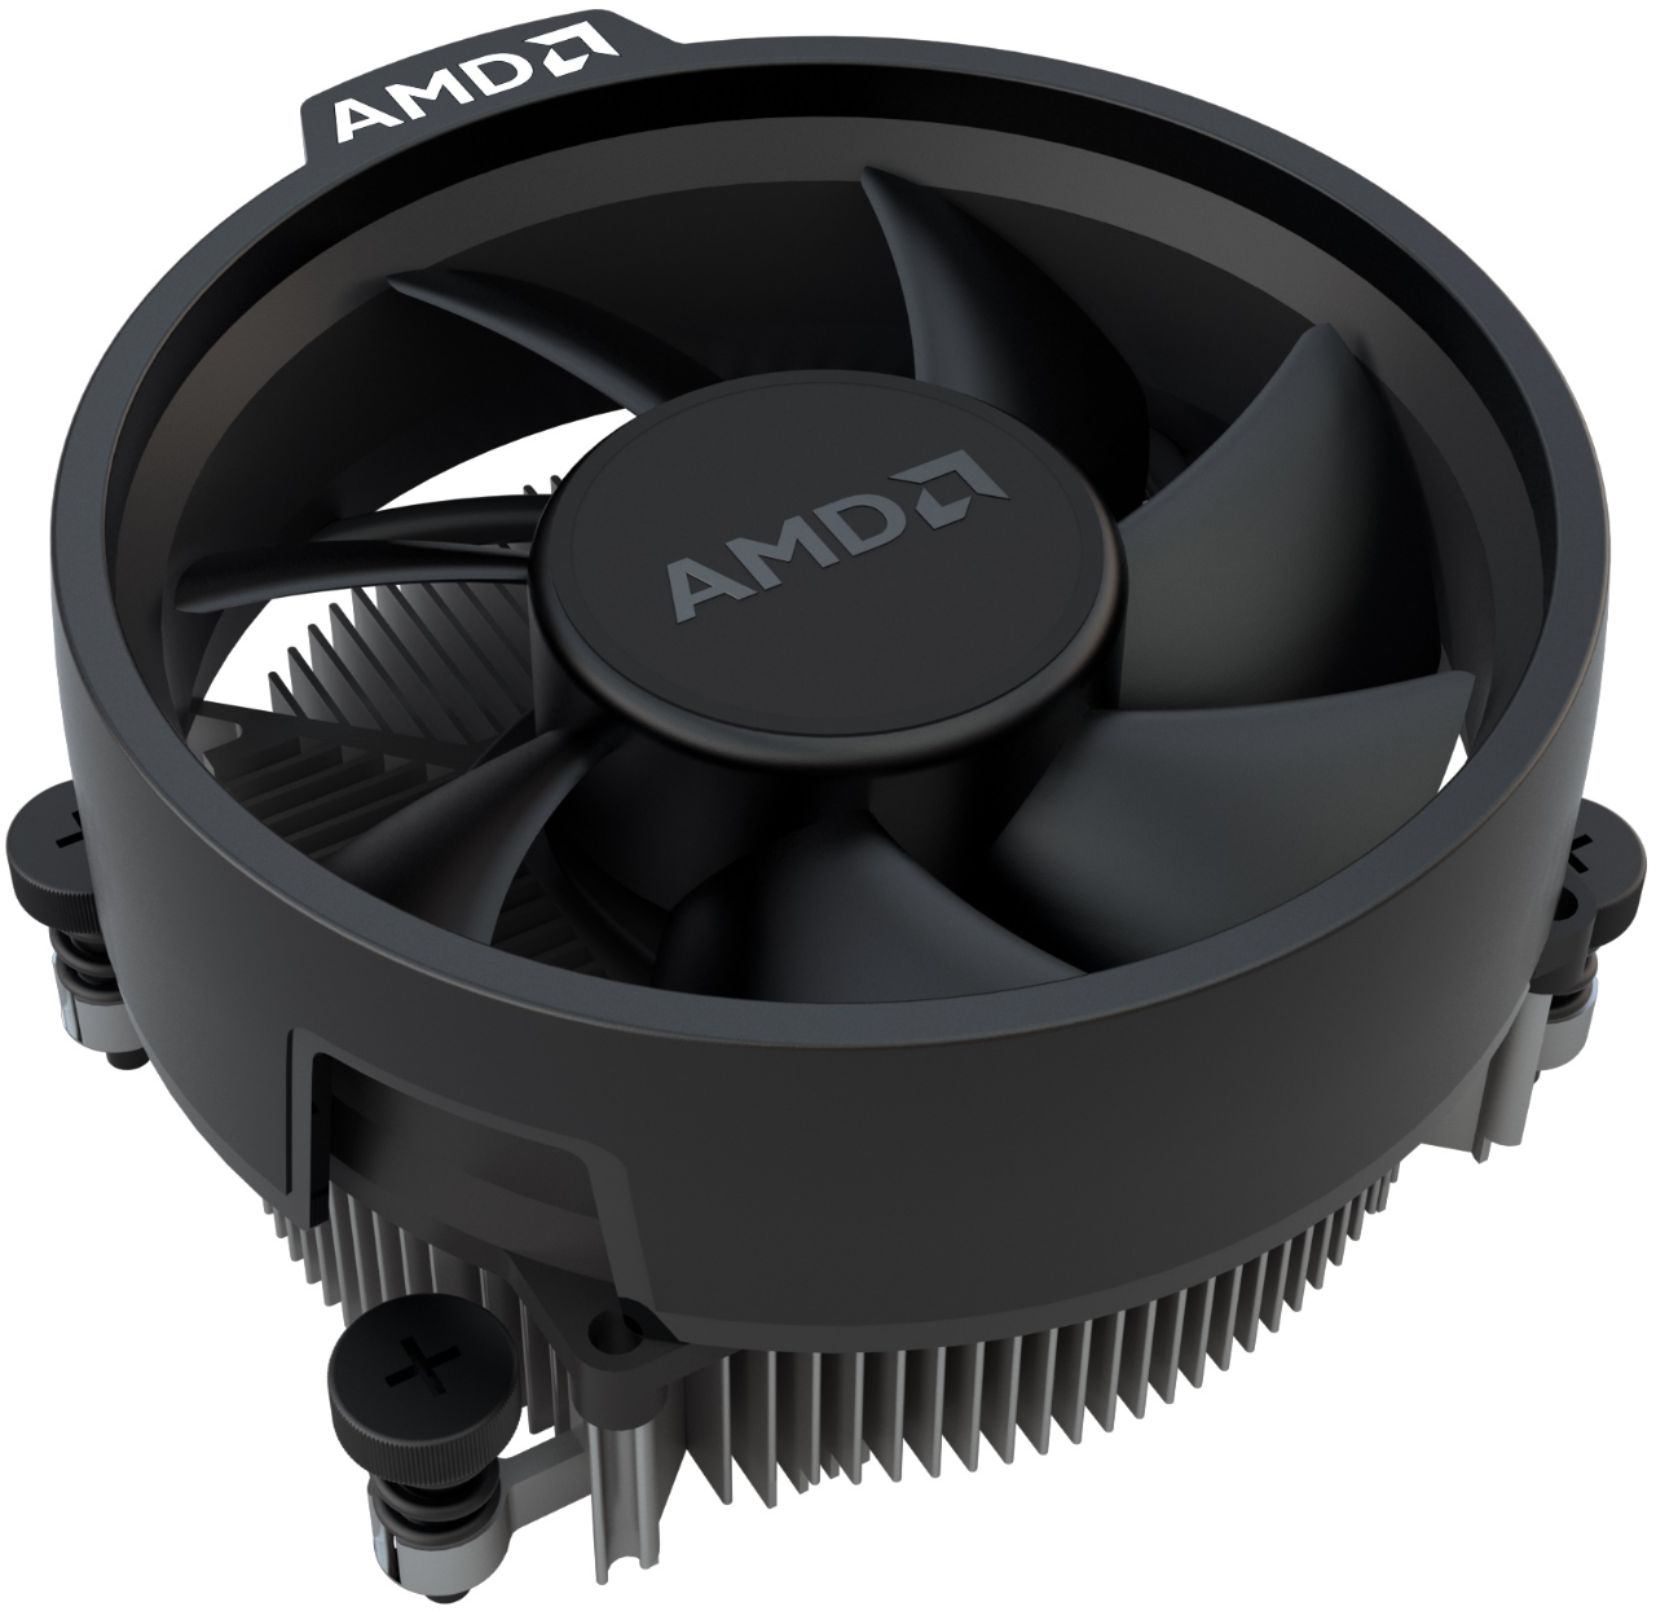 AMD - Ryzen 5 5600X 4th Gen 6-core, 12-threads Unlocked Desktop Processor  With Wraith Stealth Cooler